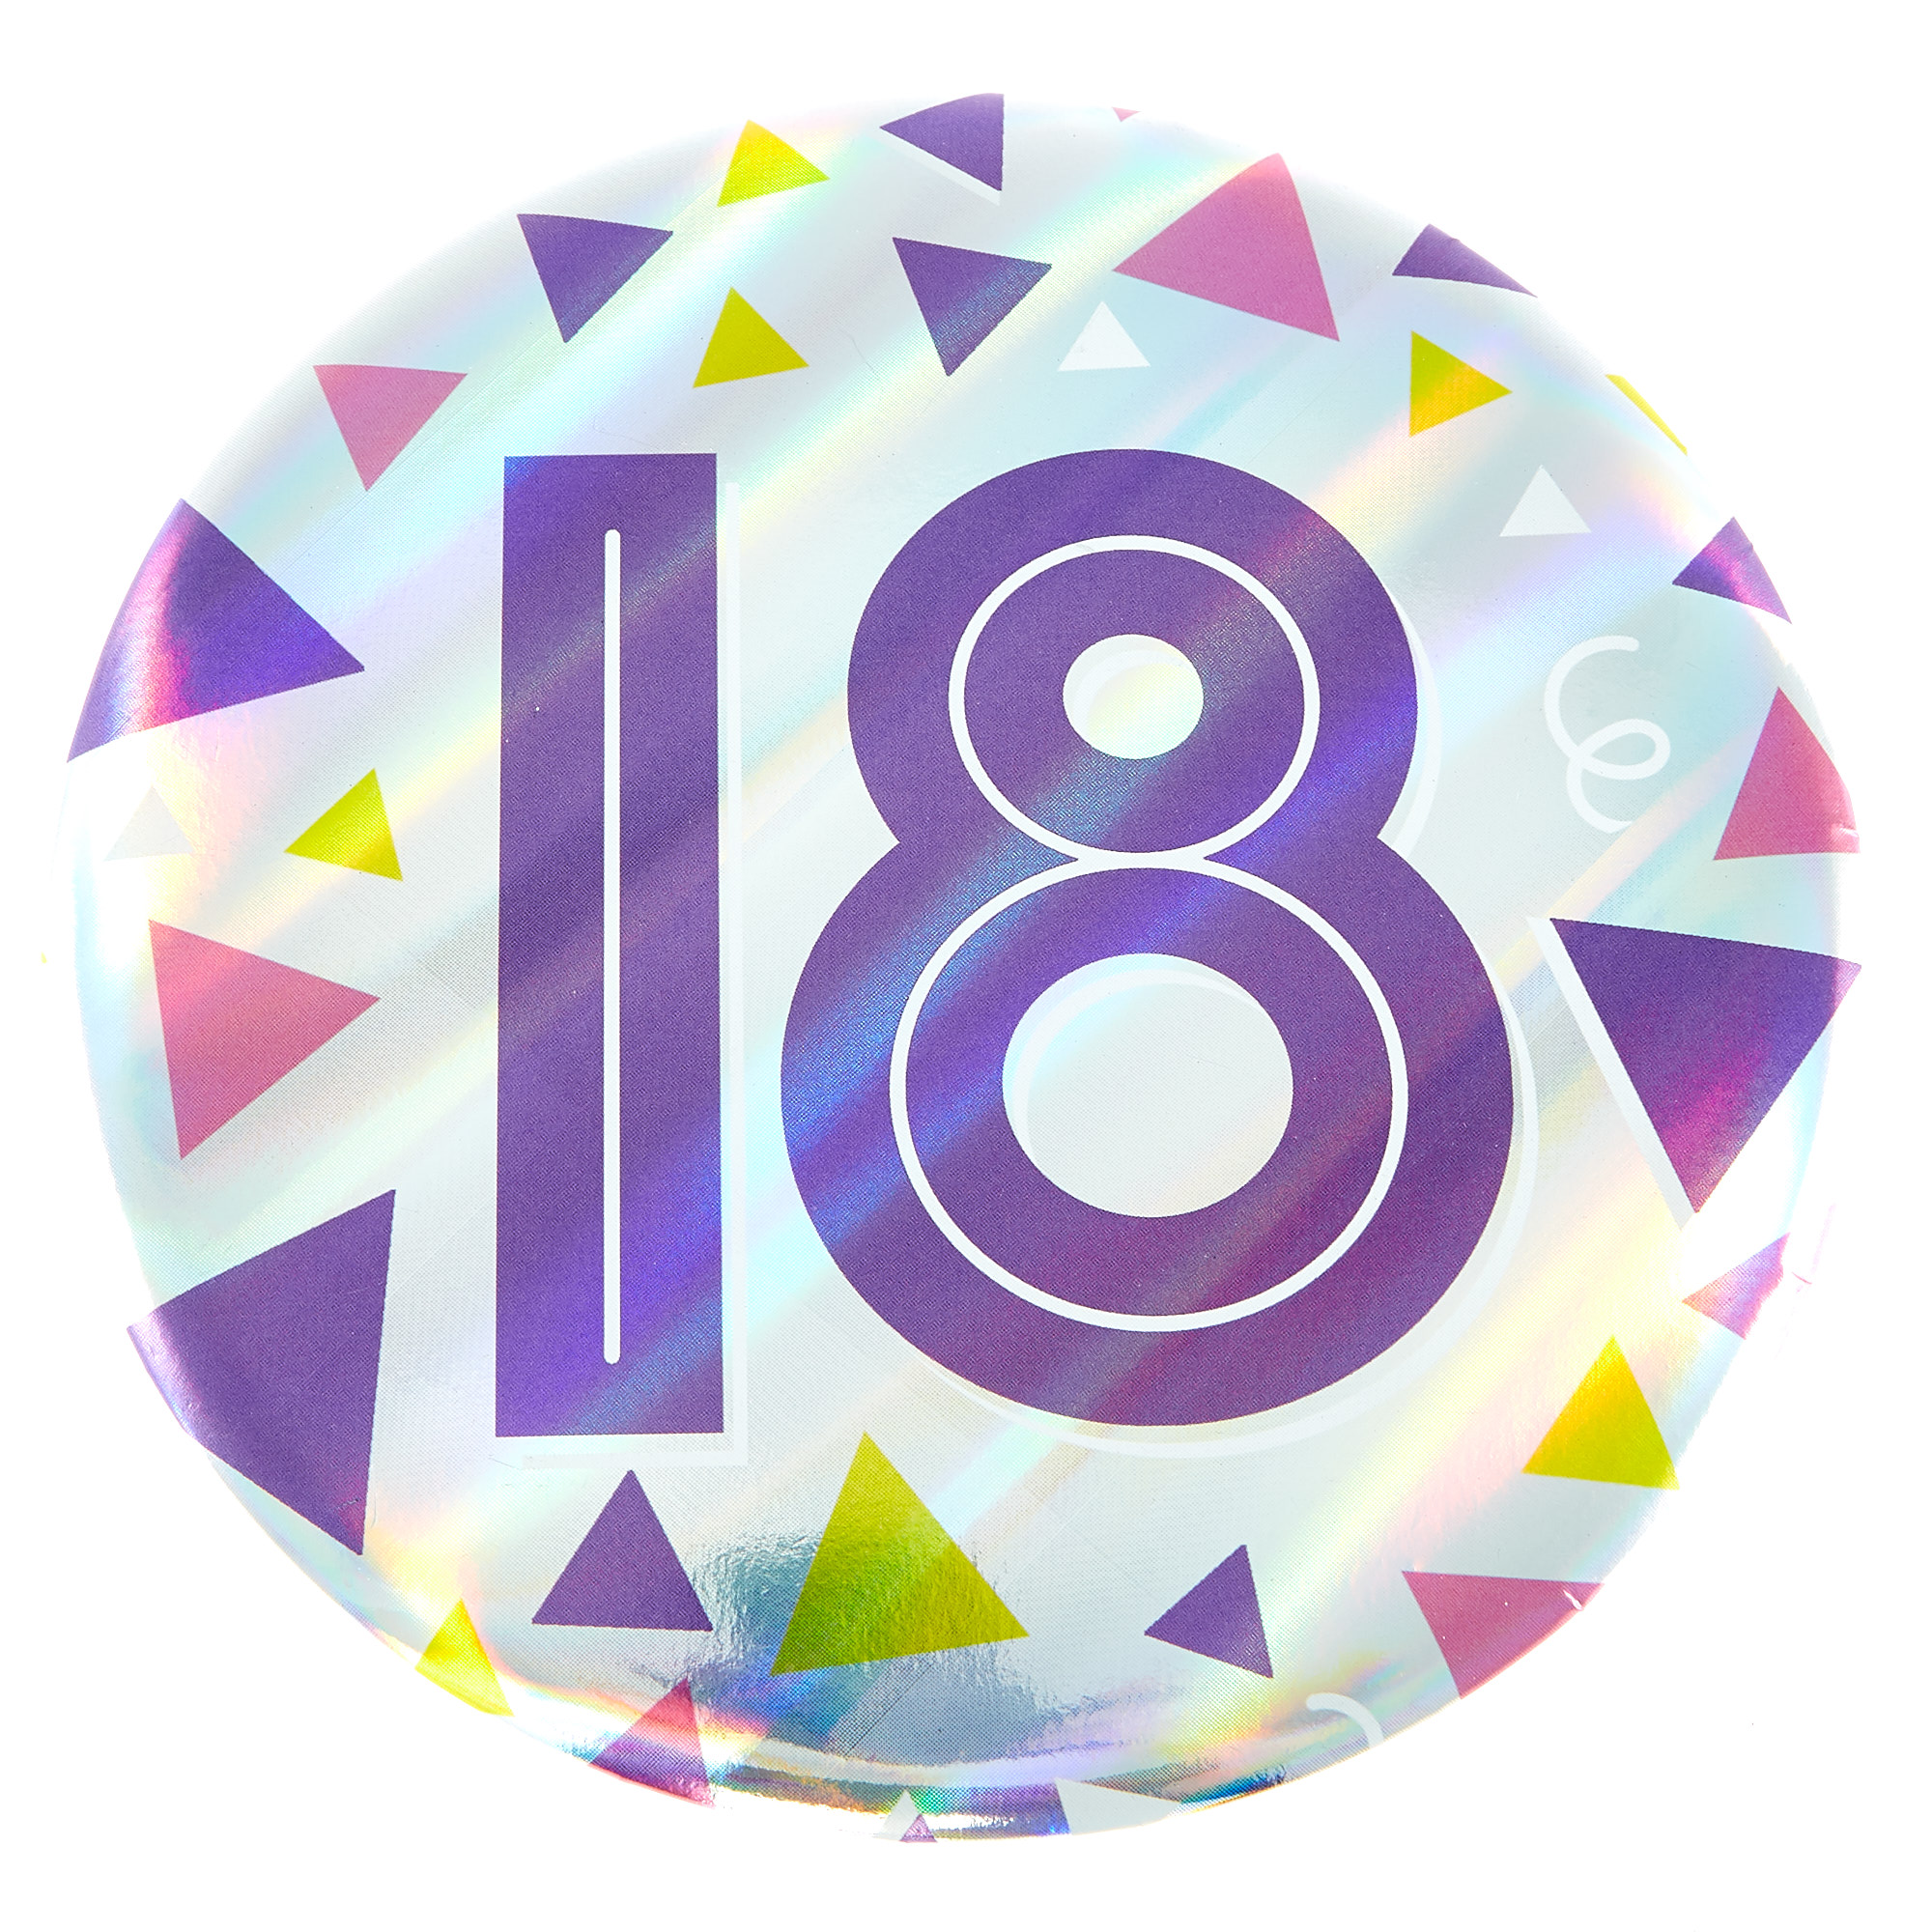 Giant 18th Birthday Badge - Pink